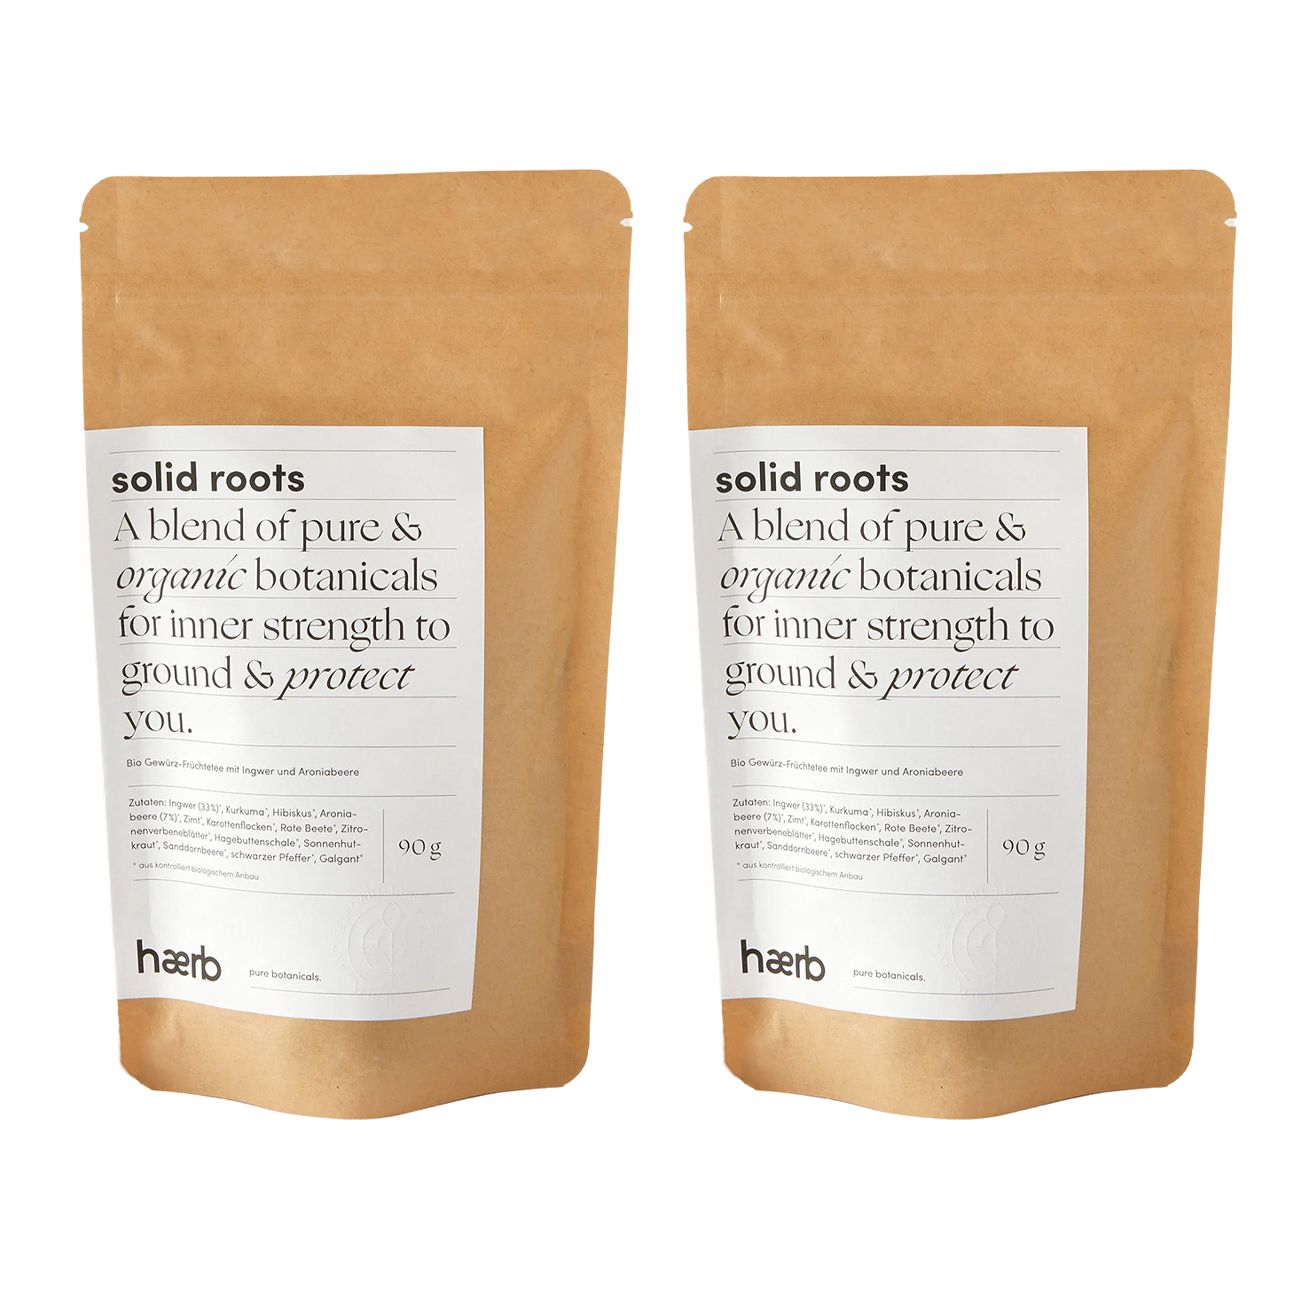 haerb Solid Roots Tea - Ingwer und Aroniabeere